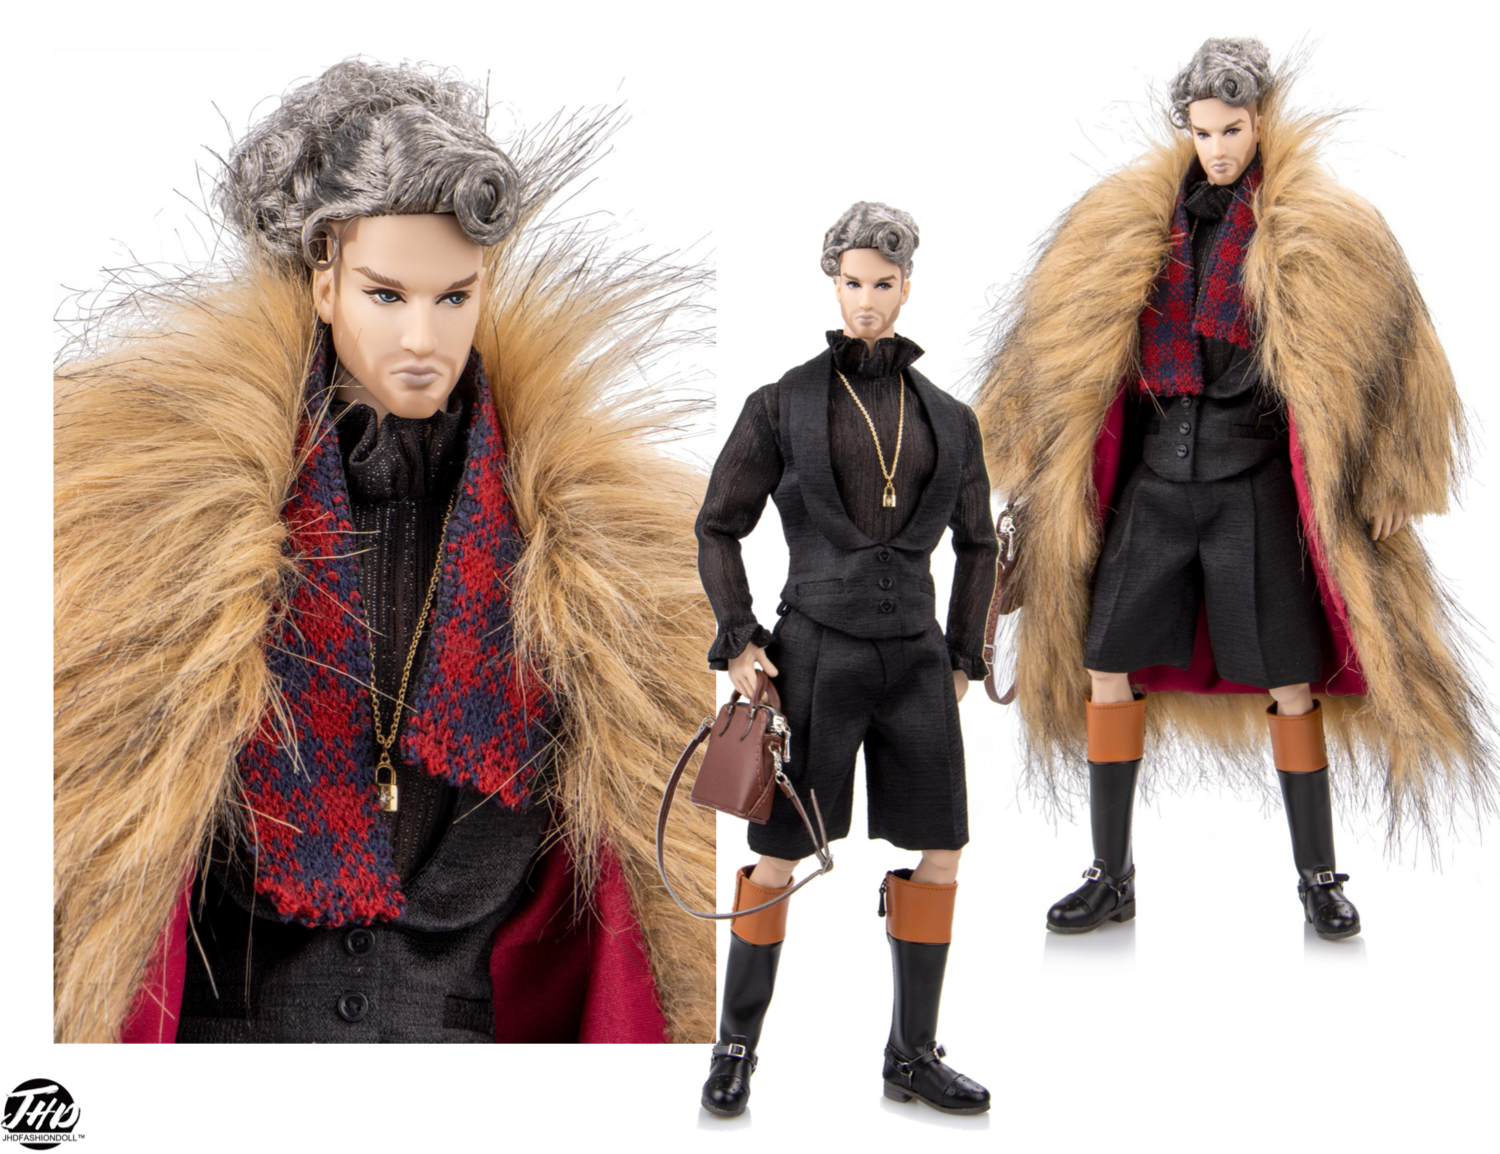 2021 JHD Fashion Doll: "Romance" Adonis Male Fashion Doll Gift-Set